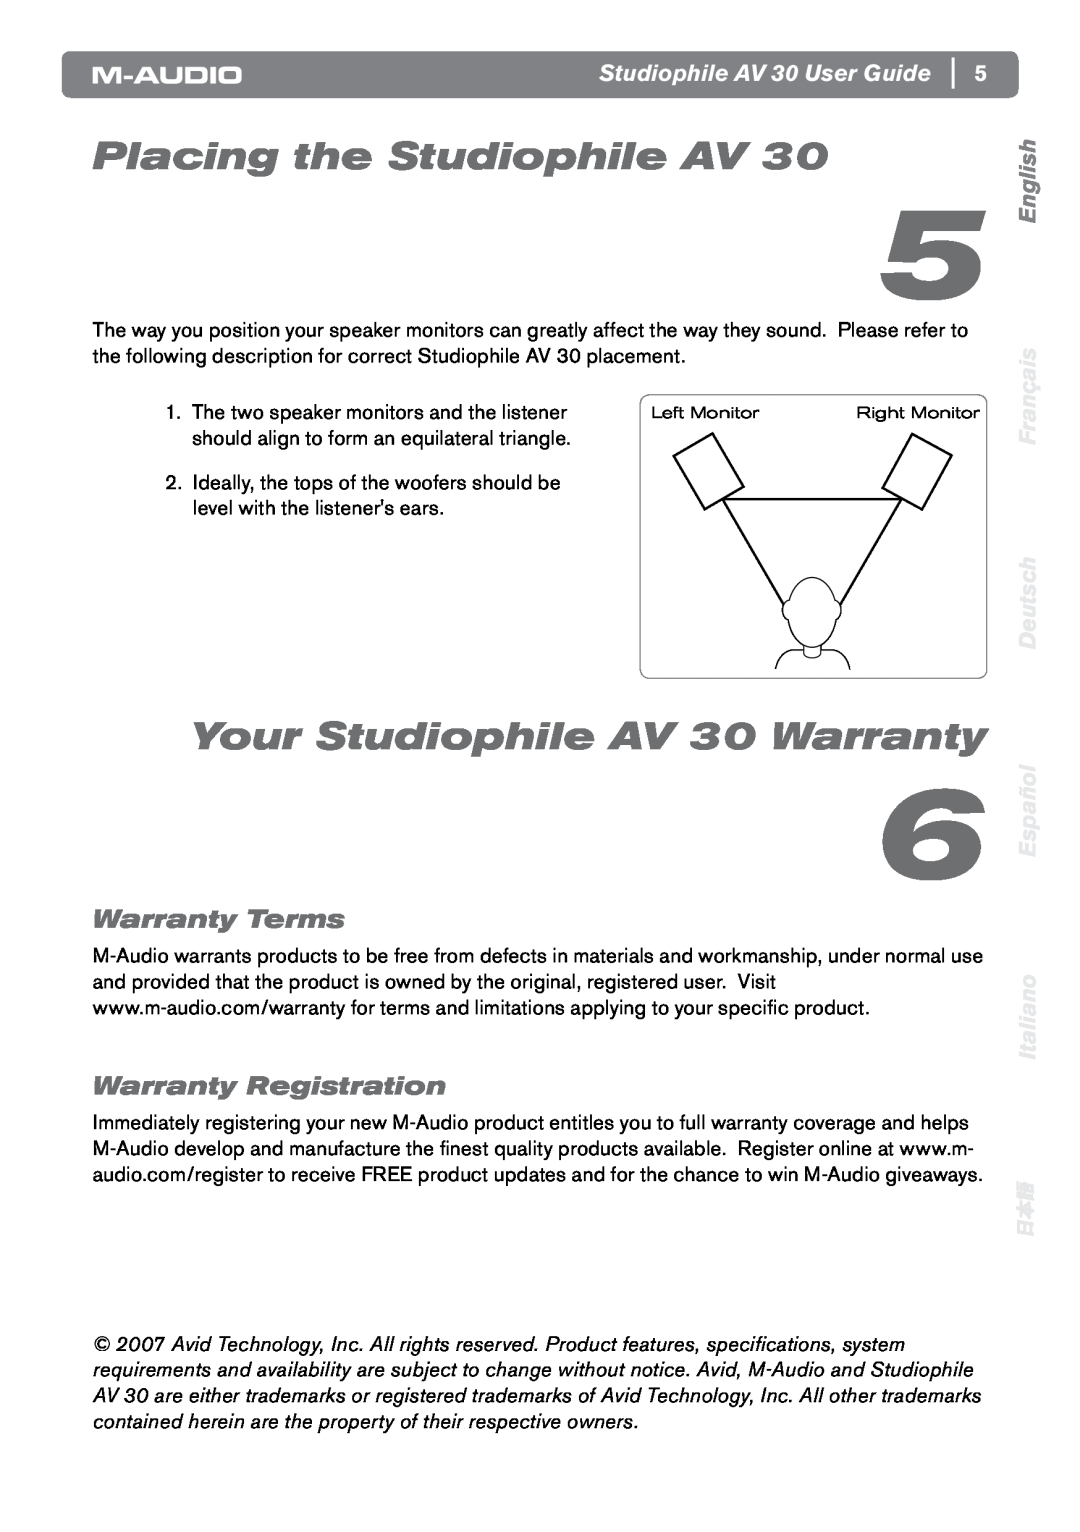 M-Audio Placing the Studiophile AV, Your Studiophile AV 30 Warranty, Warranty Terms, Warranty Registration, English 